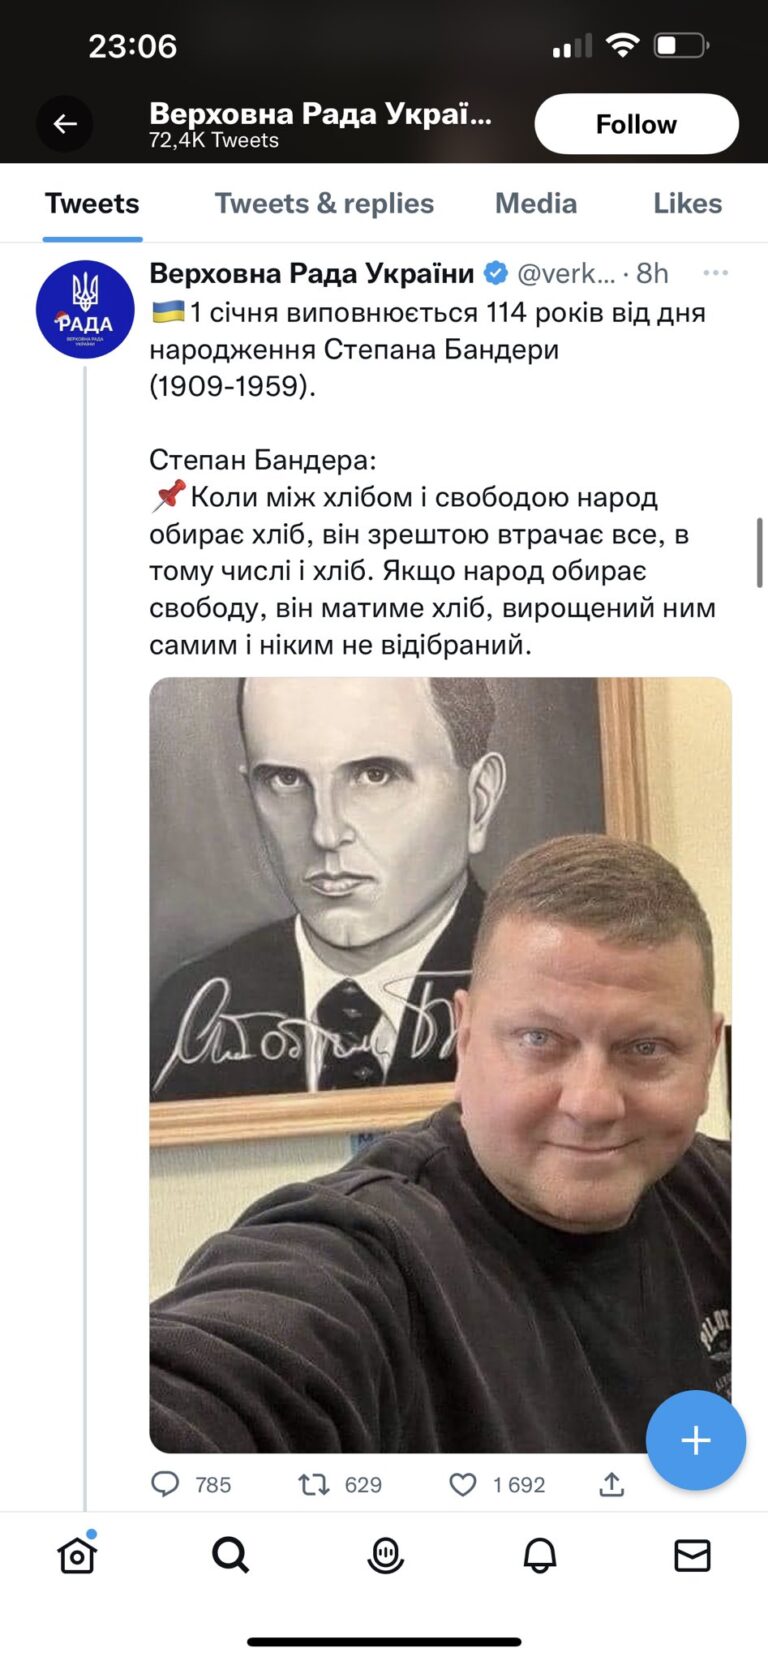 Ukrainian parliament shares Twitter post celebrating Nazi collaborator